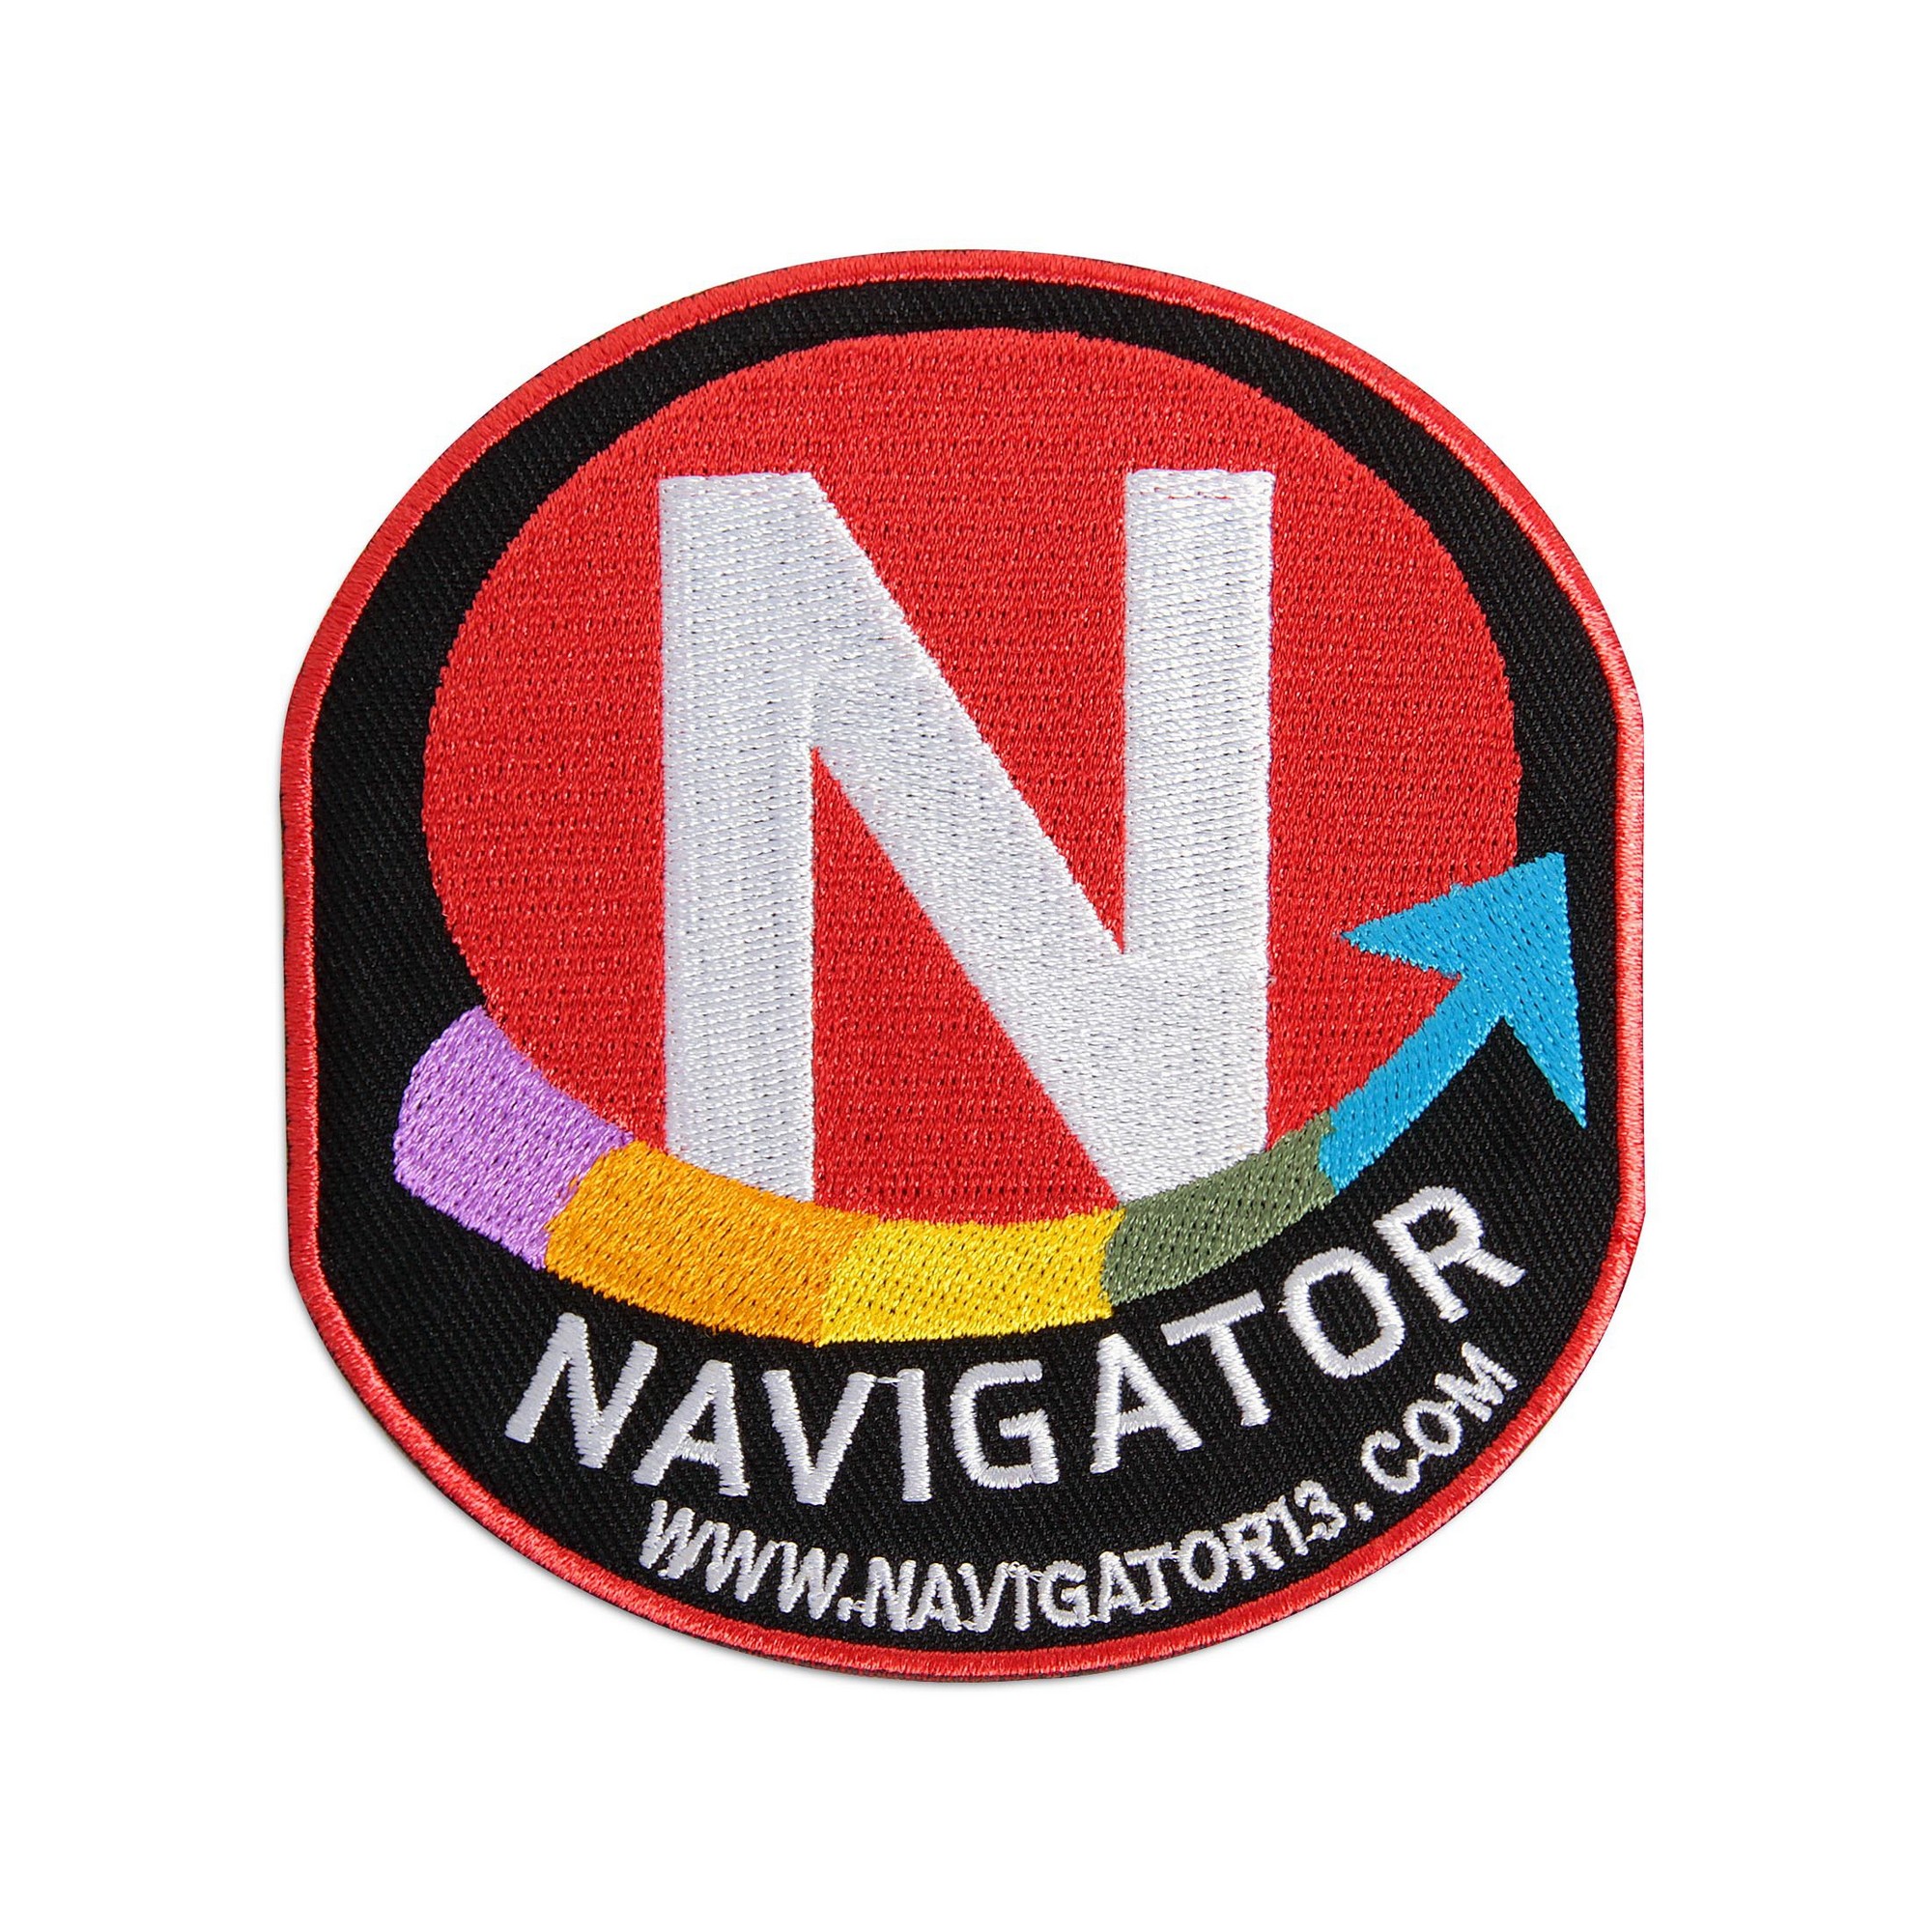  Navigator Pro 5850  